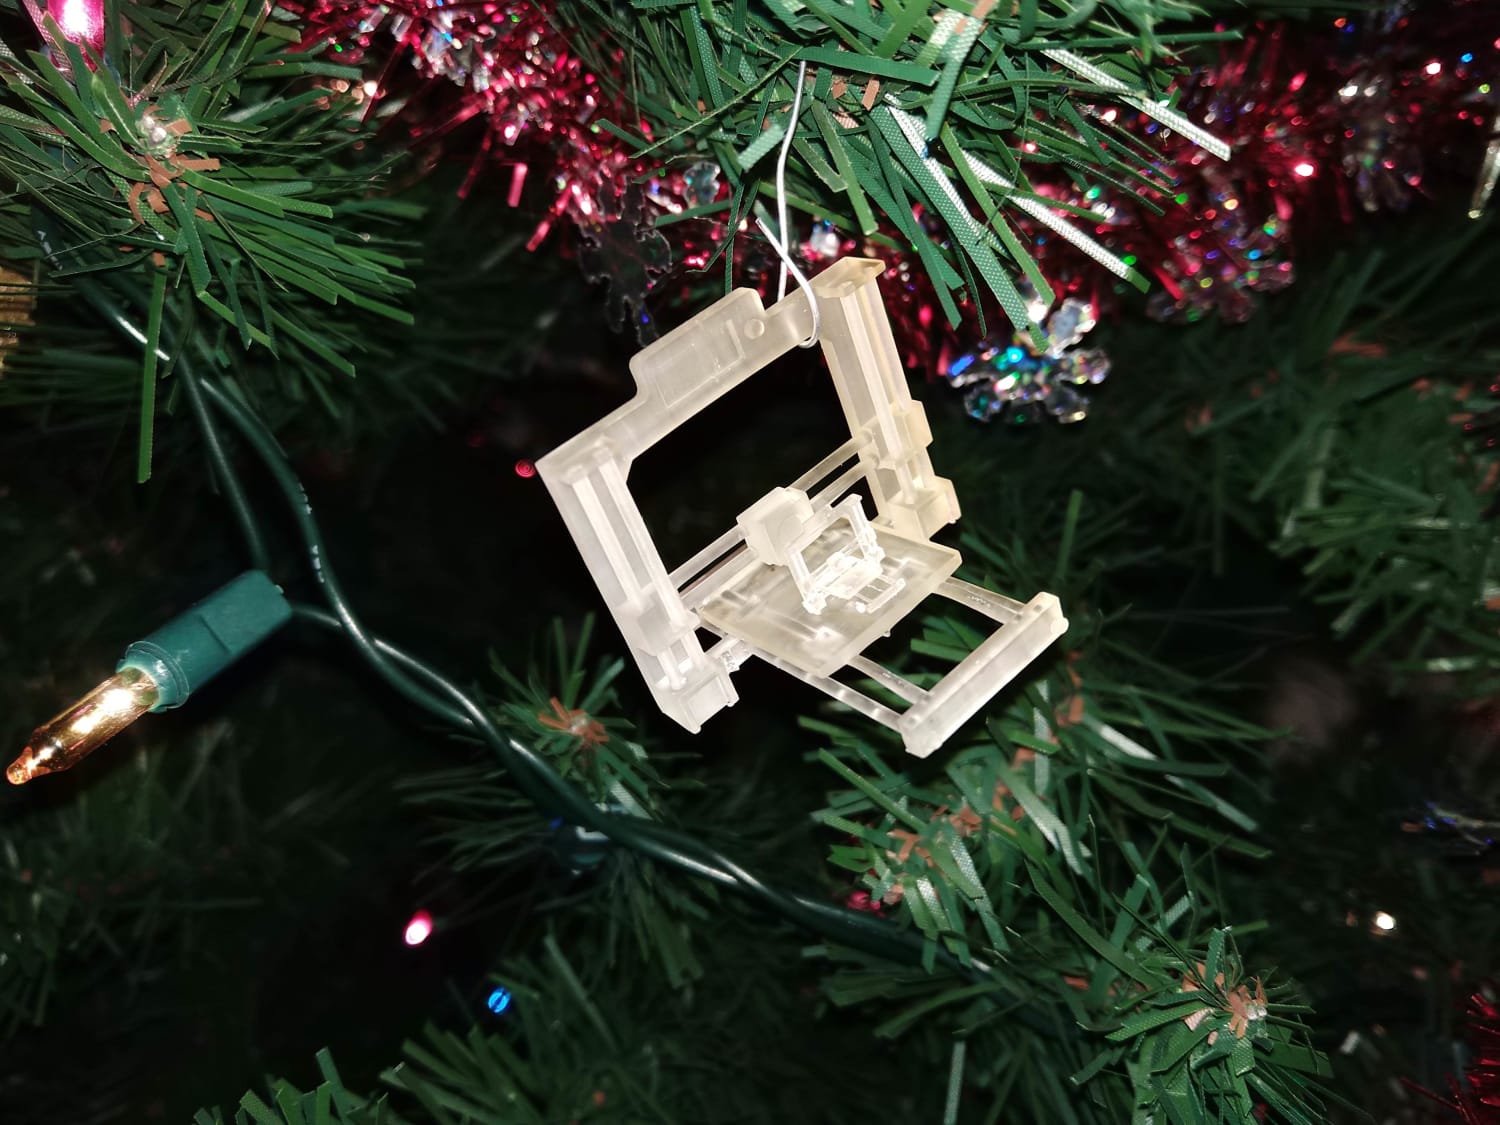 My Christmas ornament of a 3D Printer printing a 3D Printer that I printed on my 3D Printer!